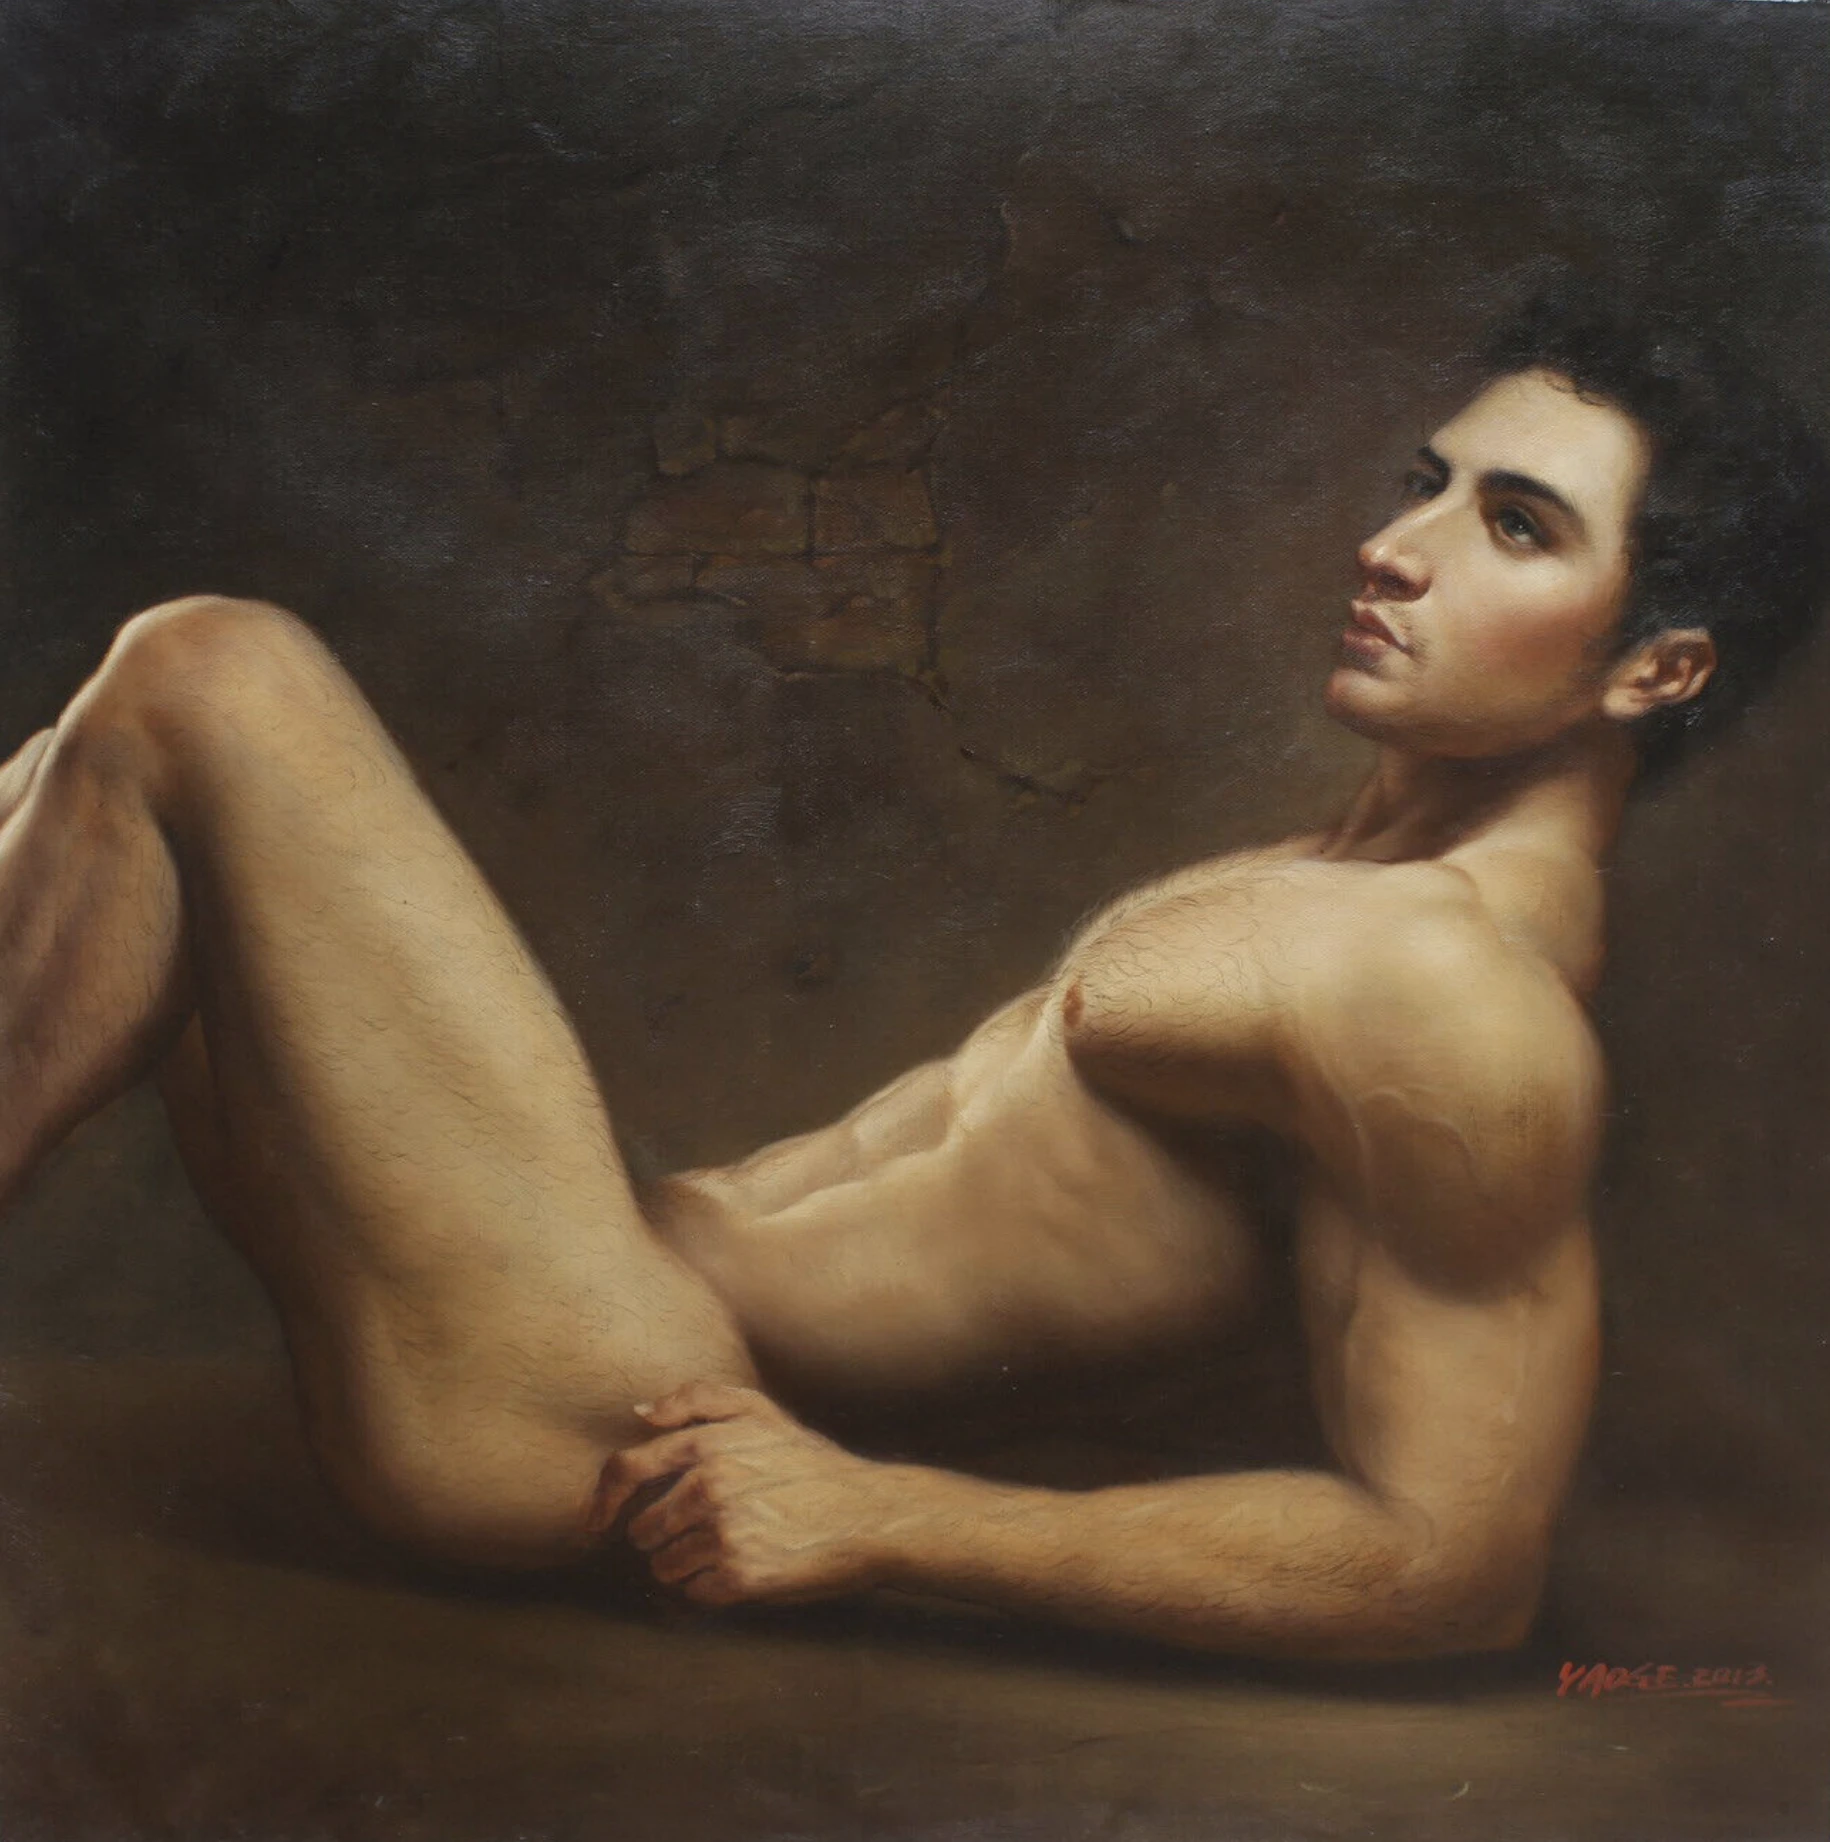 Artistic Man Nude Photo Escorte Alte Oma